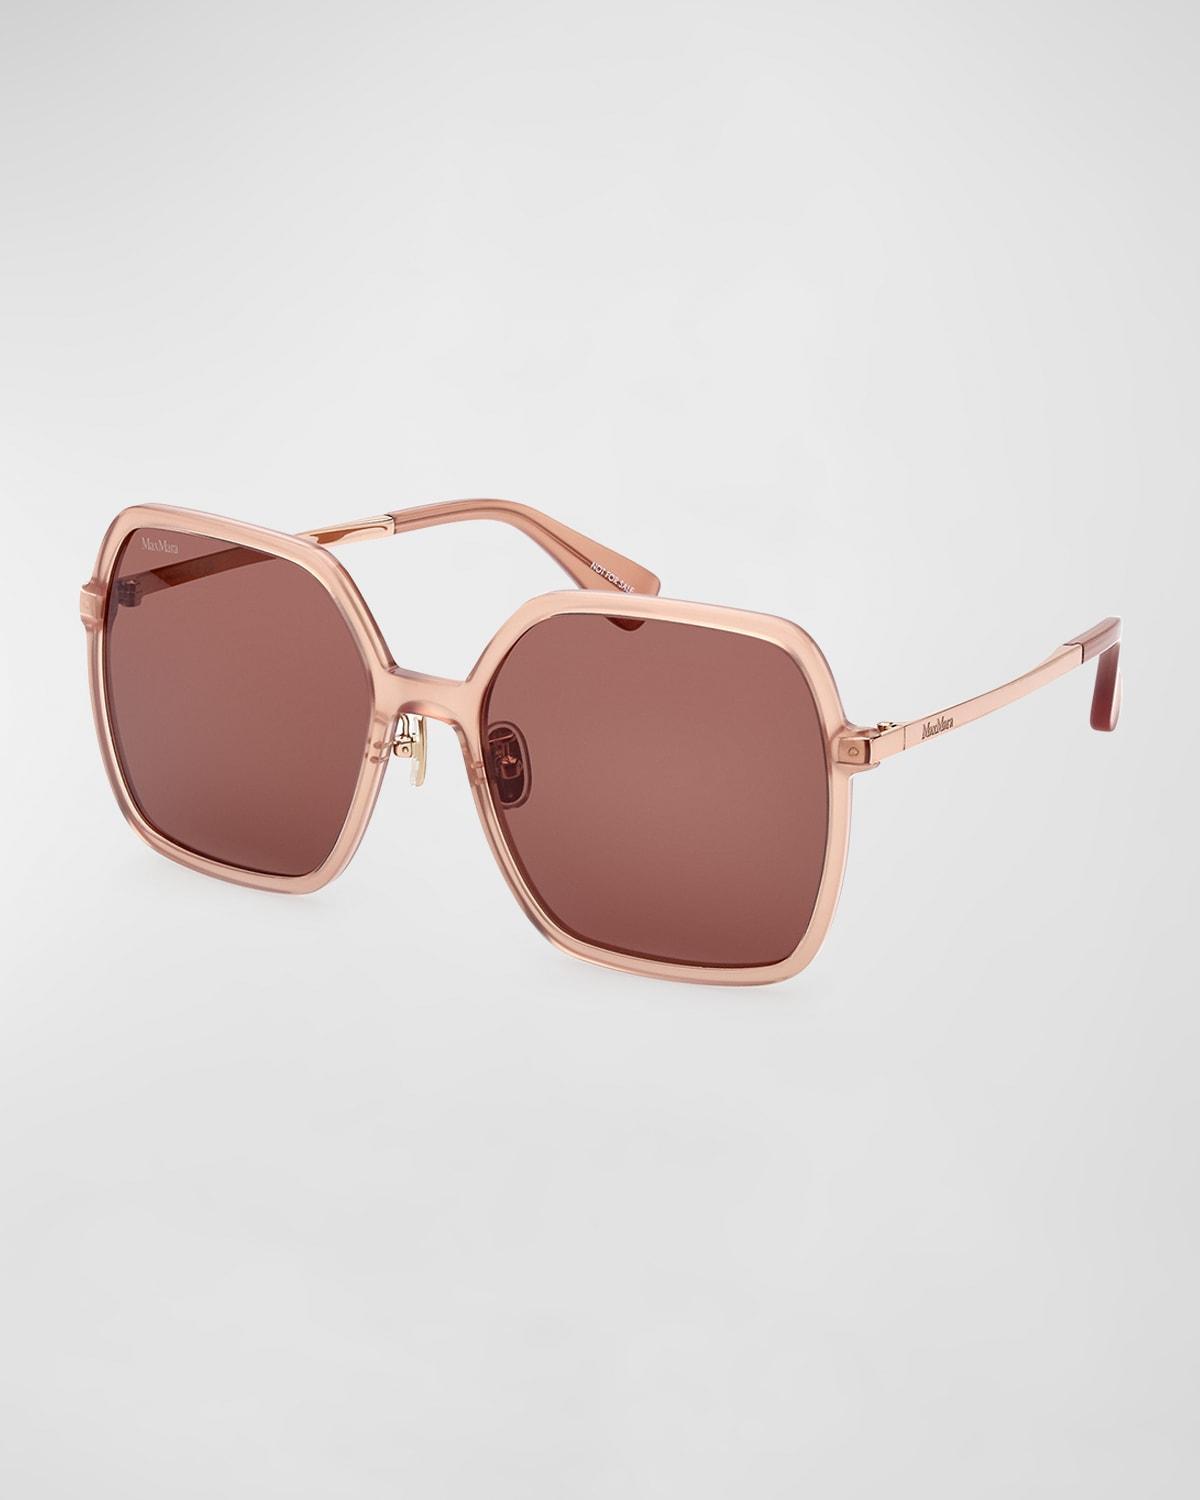 Max Mara 59mm Square Sunglasses Product Image